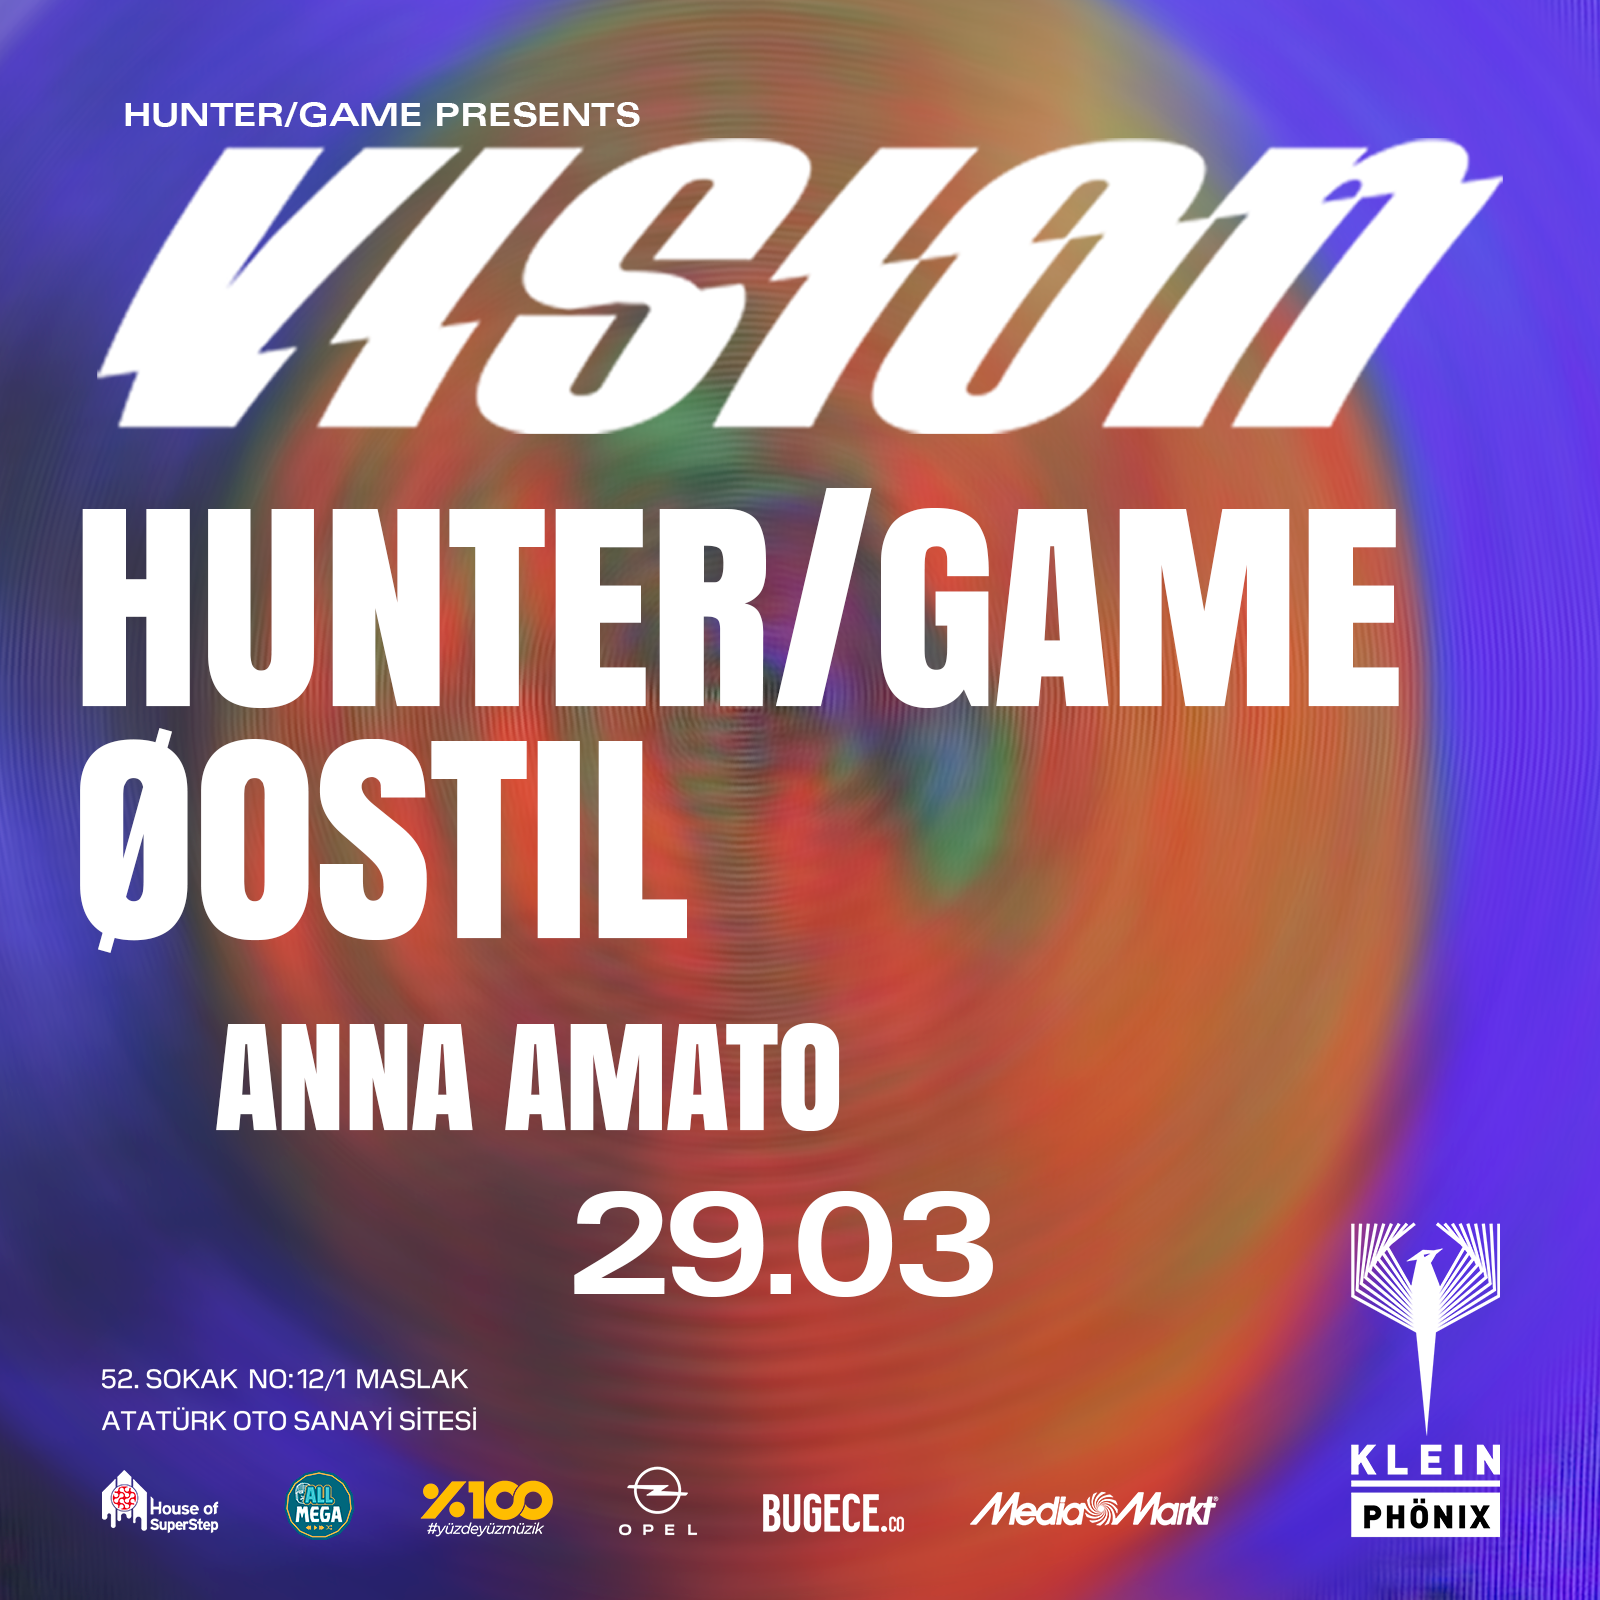 Hunter/Game + OØSTIL + ANNA AMATO + FRATELLO // HUNTER GAME PRESENTS: VISION - Página frontal